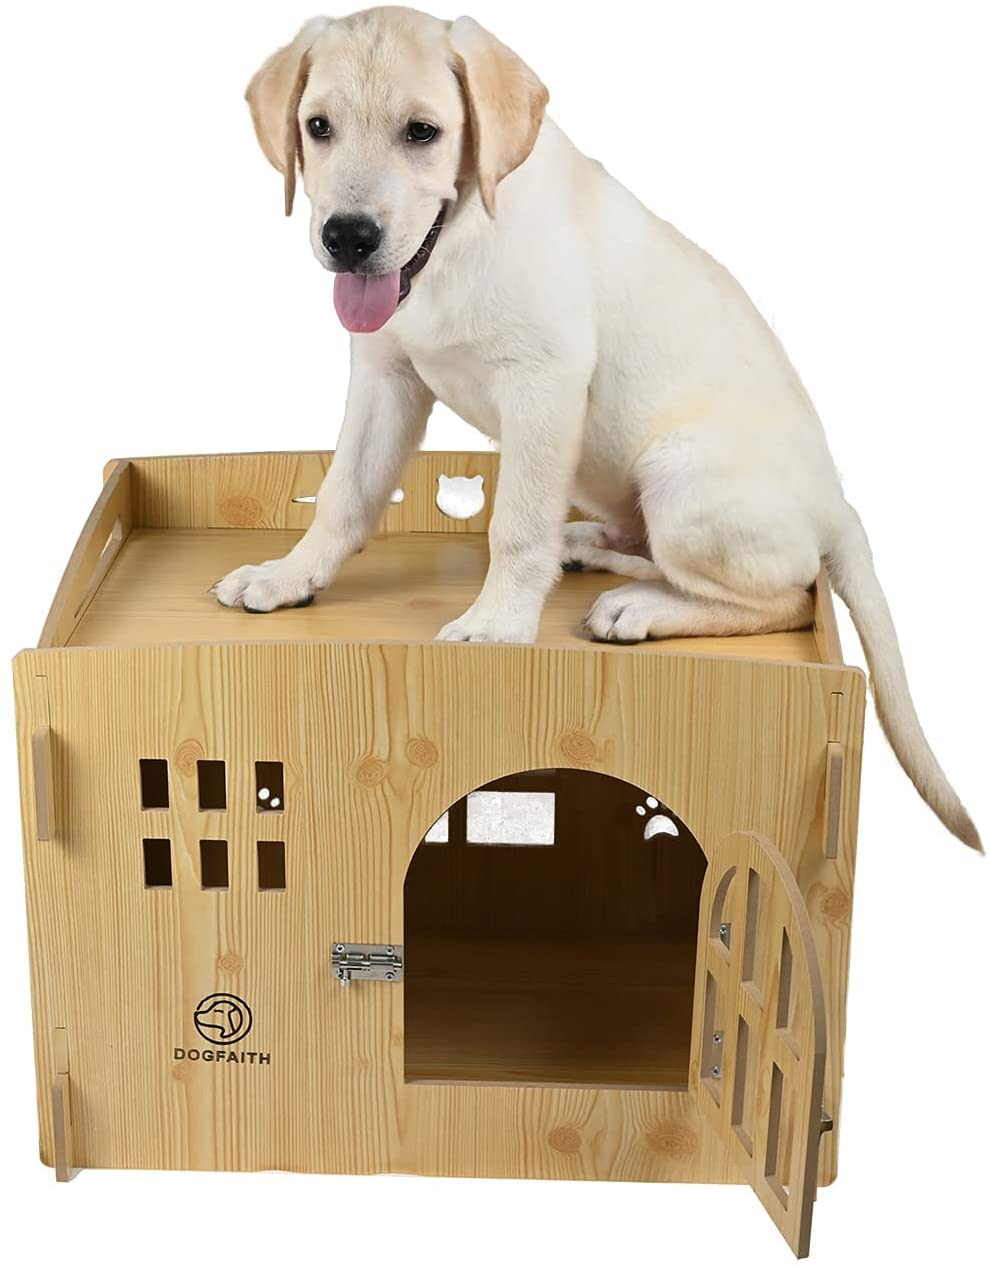 DOGFAITH Wooden Puppy Pet Dog House Cat Wood Room